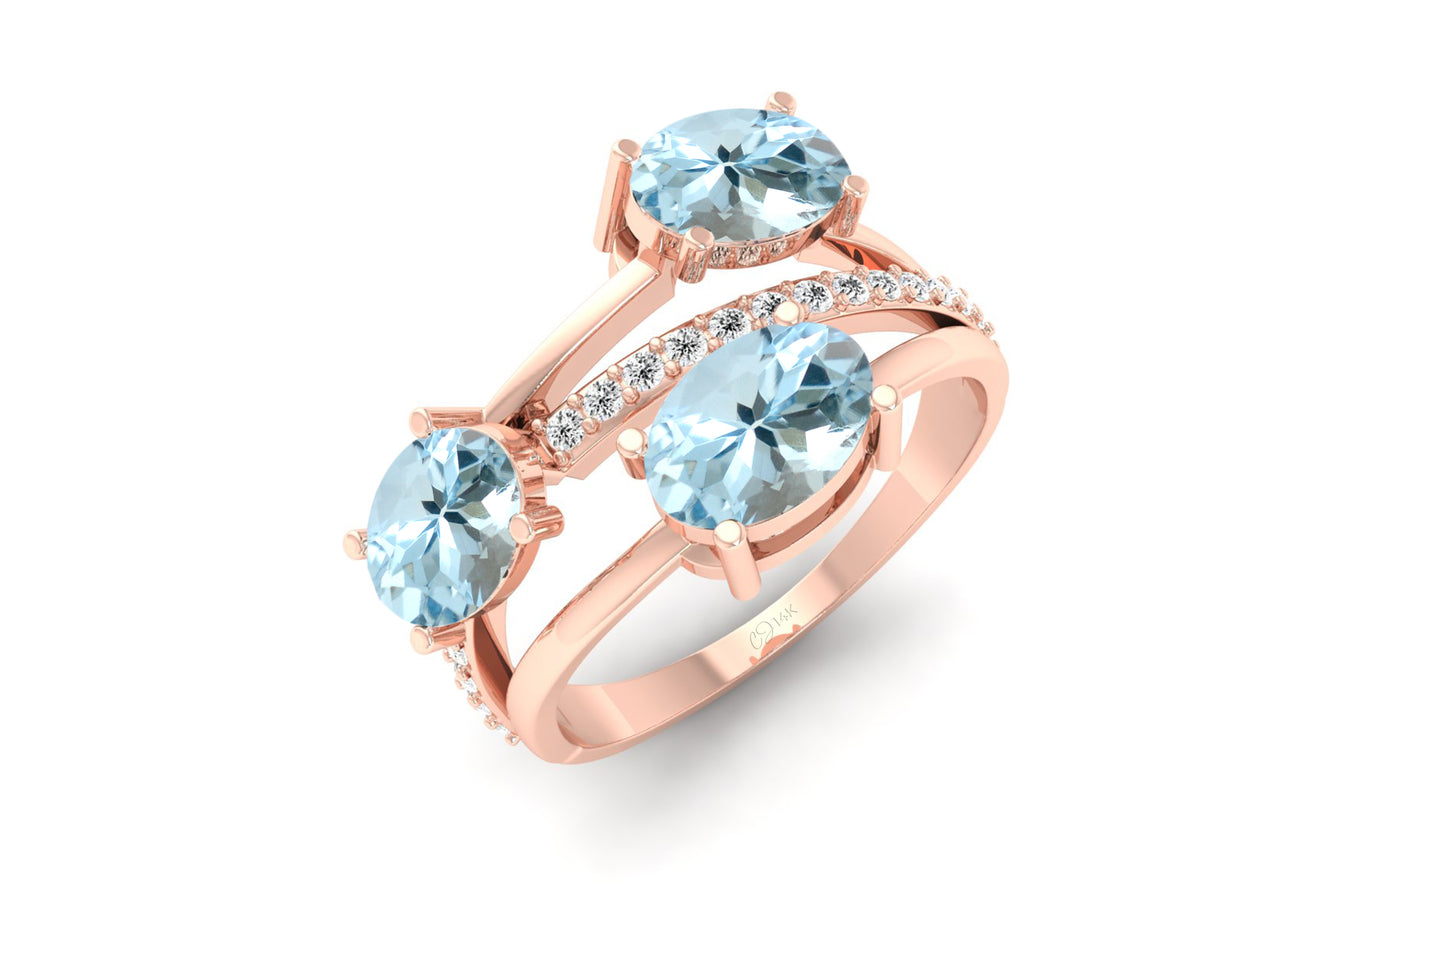 March Birthstone Natural Aquamarine 7x5mm Oval Shape Gemstone Split Shank Ring 14k Real Gold Pave Set White Diamond Wedding Jewelry